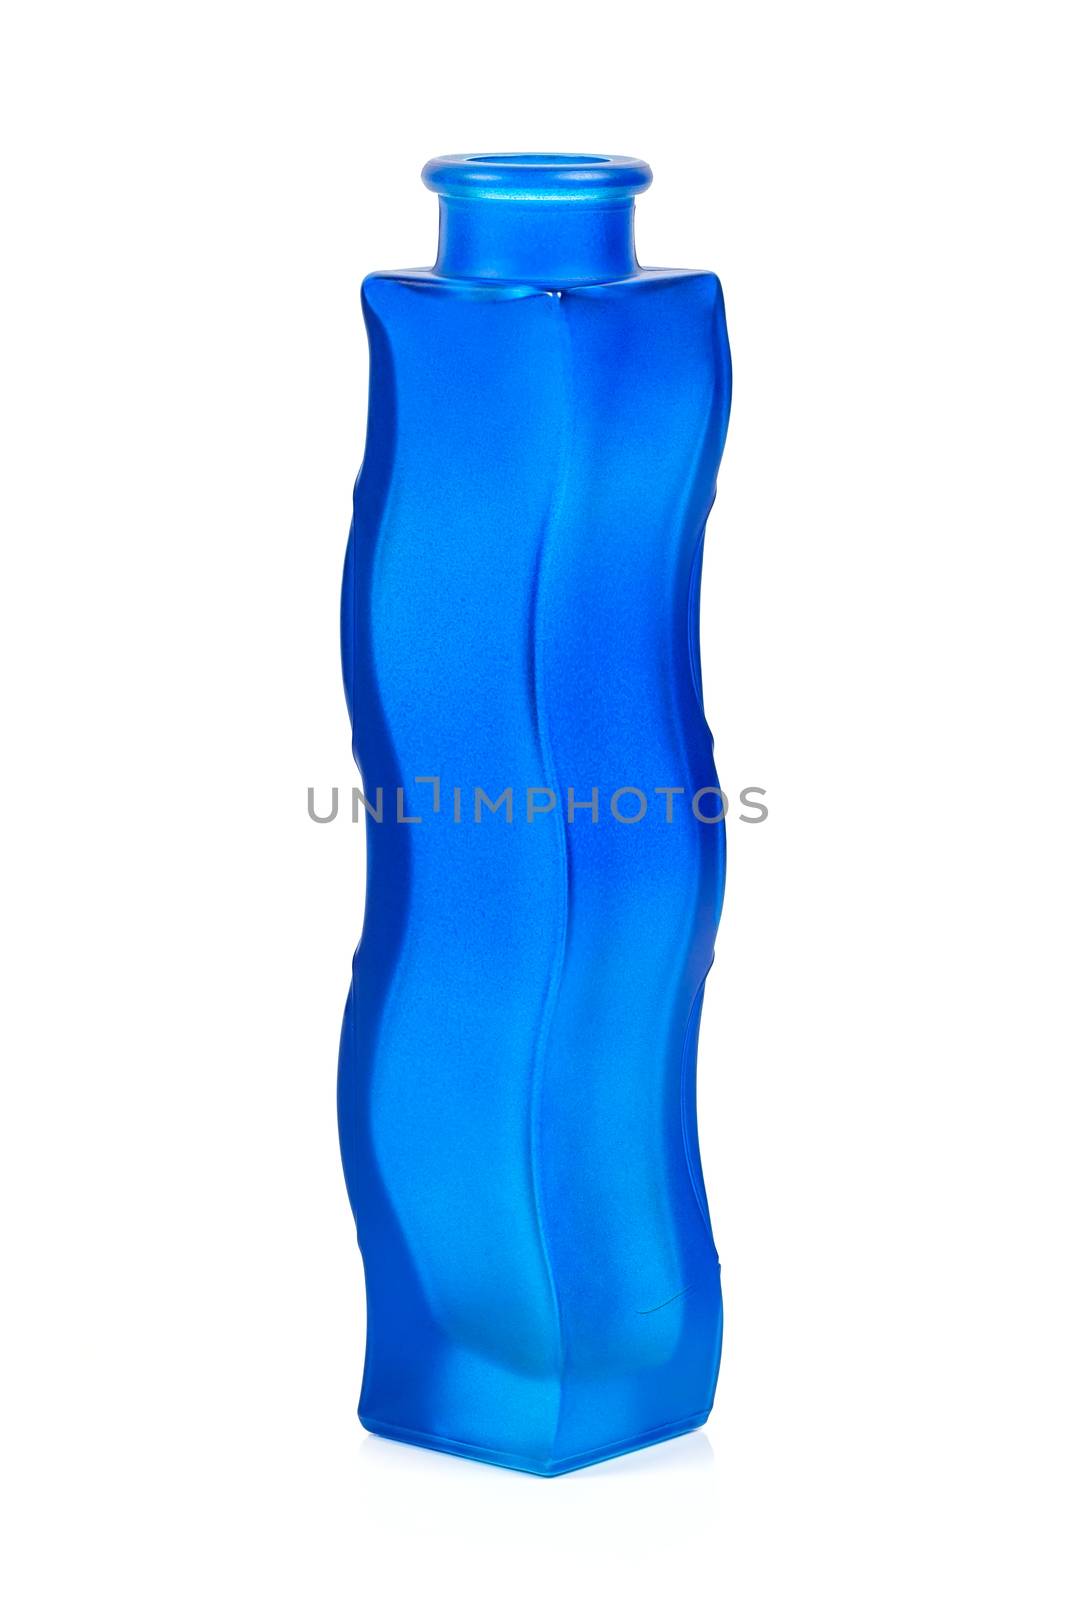 Decorative empty glass blue flower vase on white background by mkos83